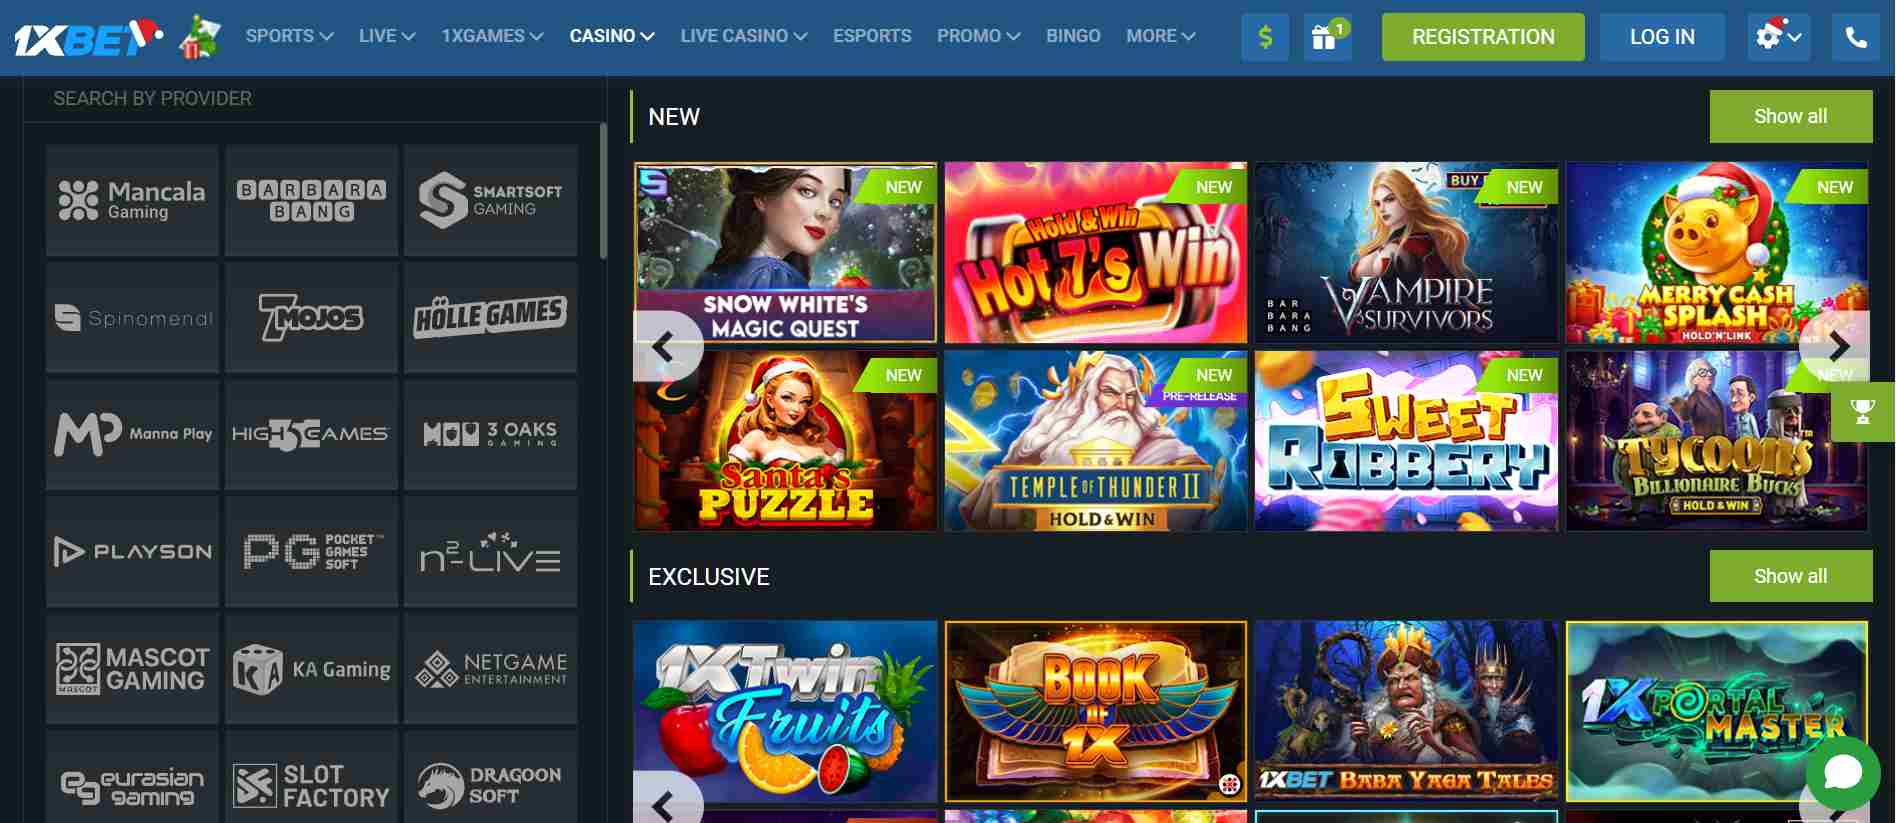 Casino games 1xbet Philippines